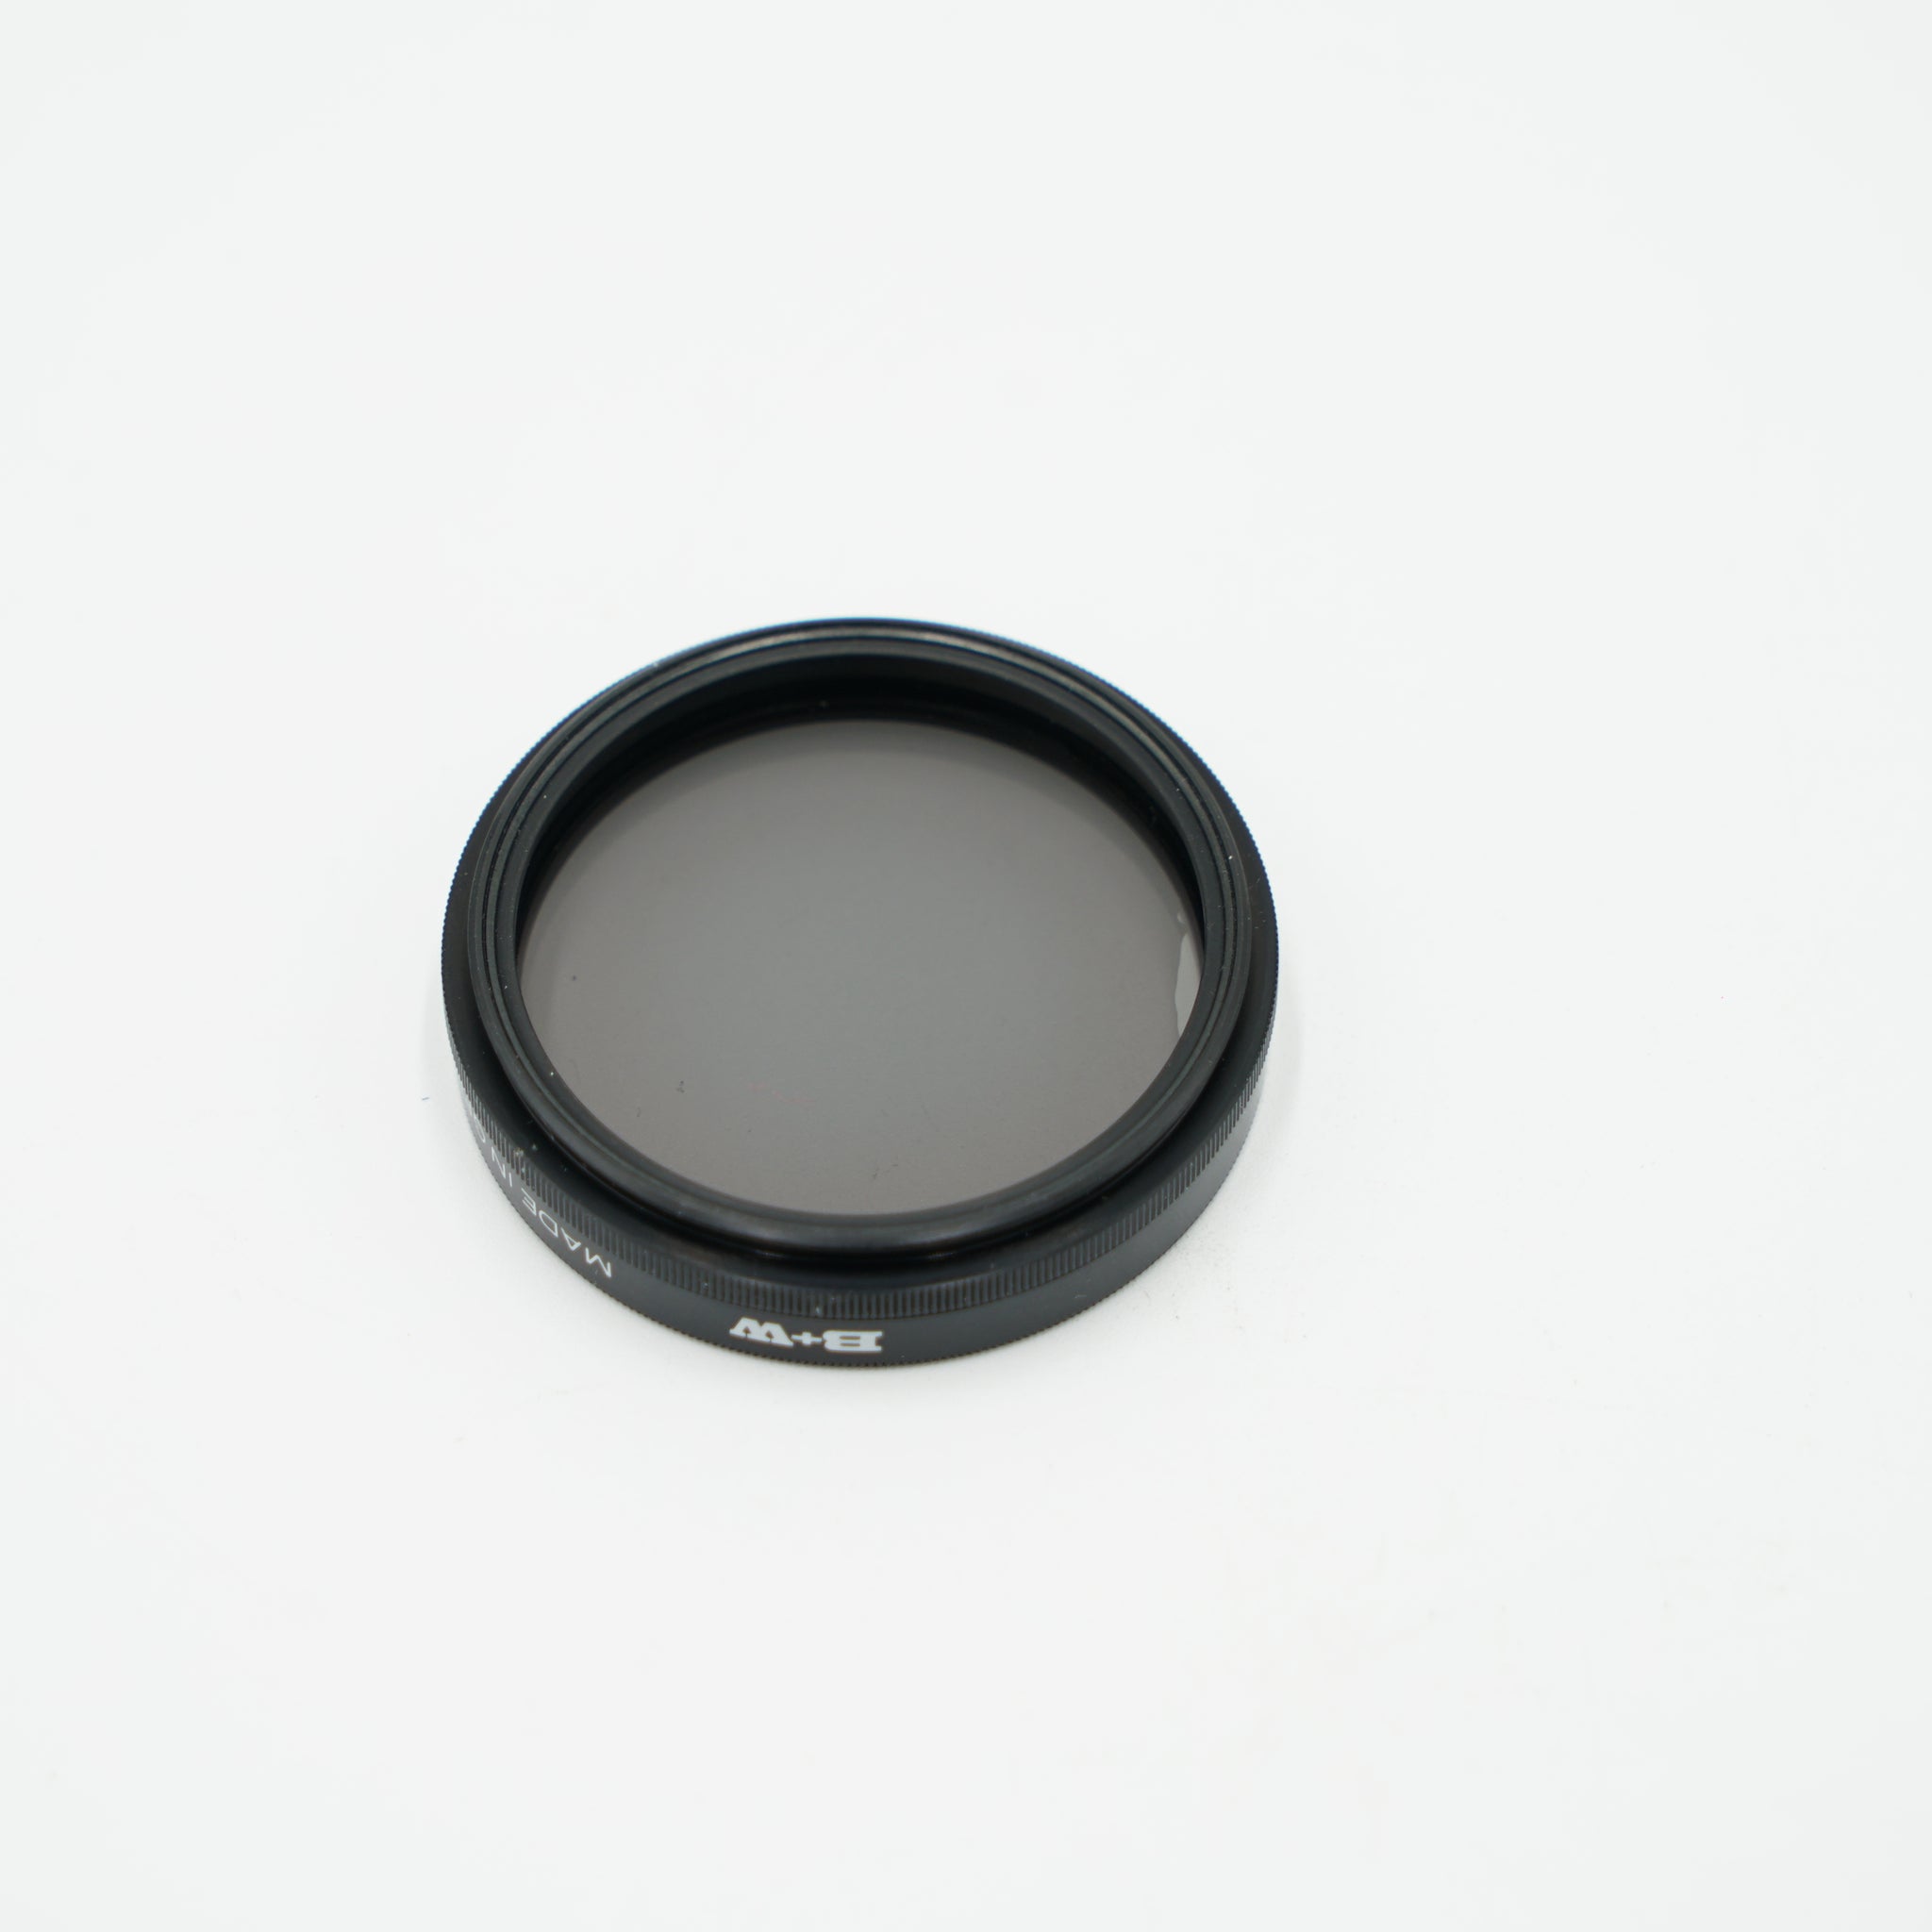 B+W 46E Circular Polarizer Filter, Used